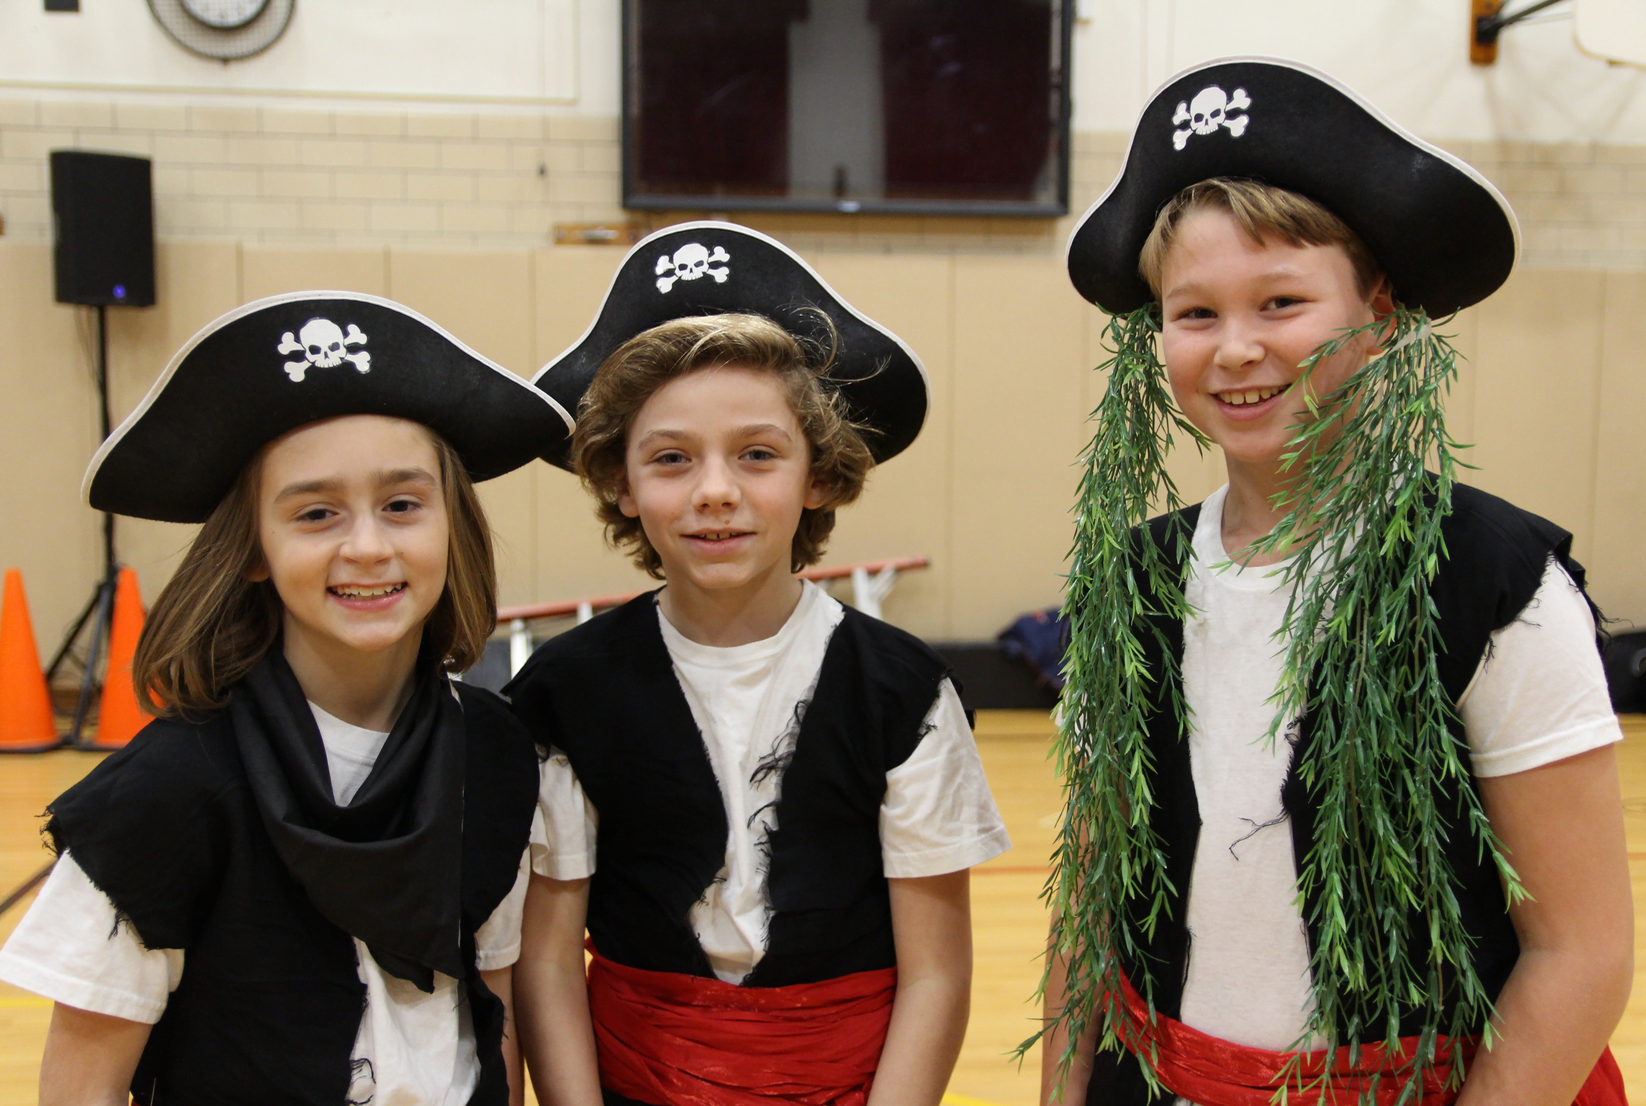 Riverside School students rehearsed Peter Pan, the musical. Jan 17, 2019 Photo: Leslie Yager